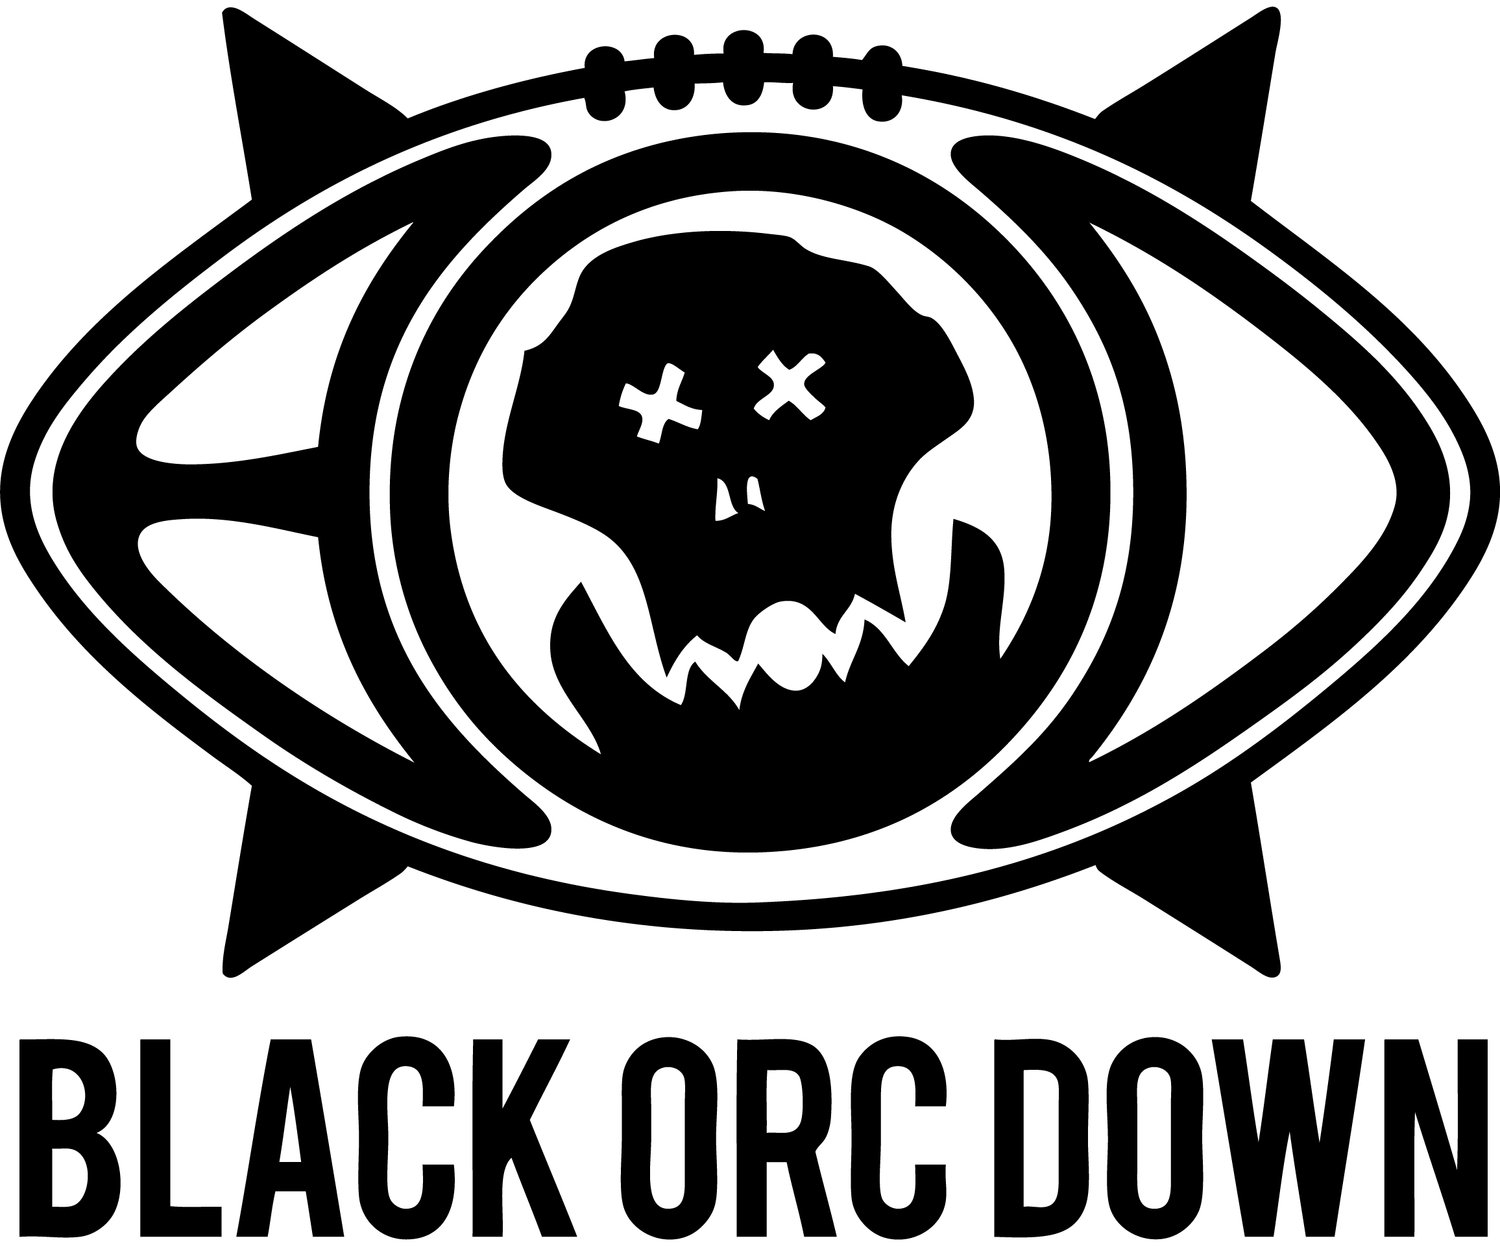 BLACK ORC DOWN